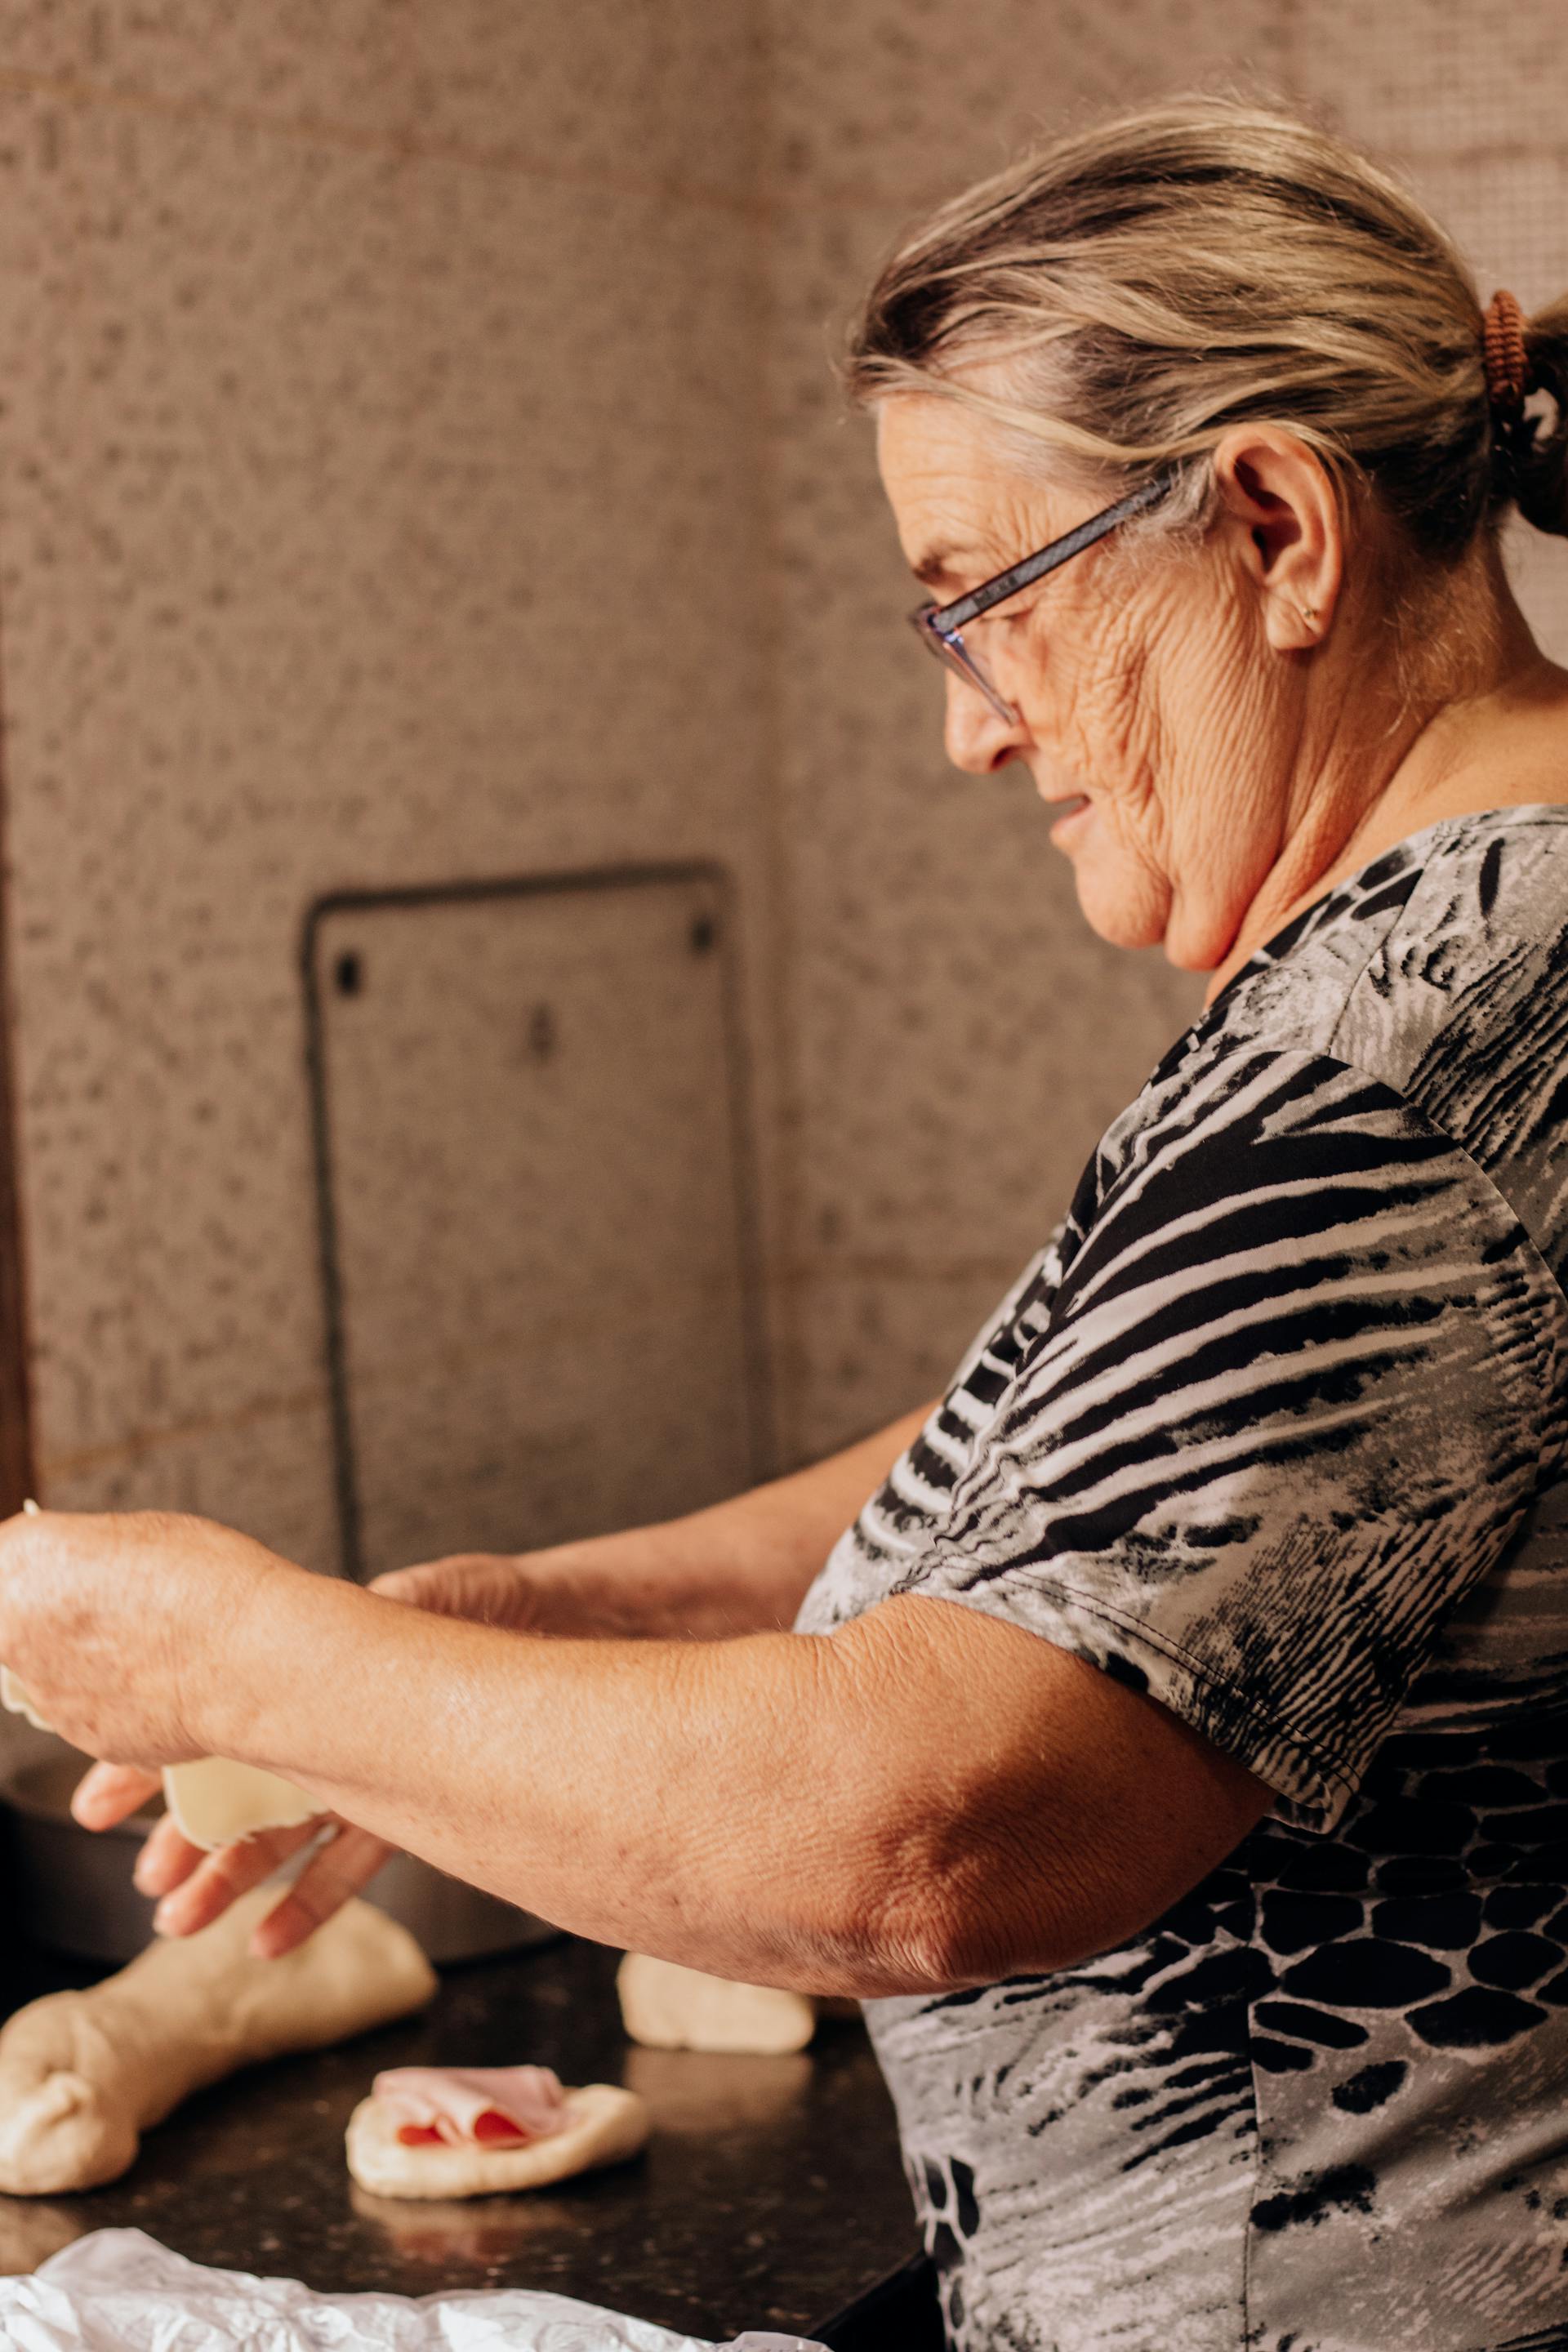 An elderly woman baking | Source: Pexels